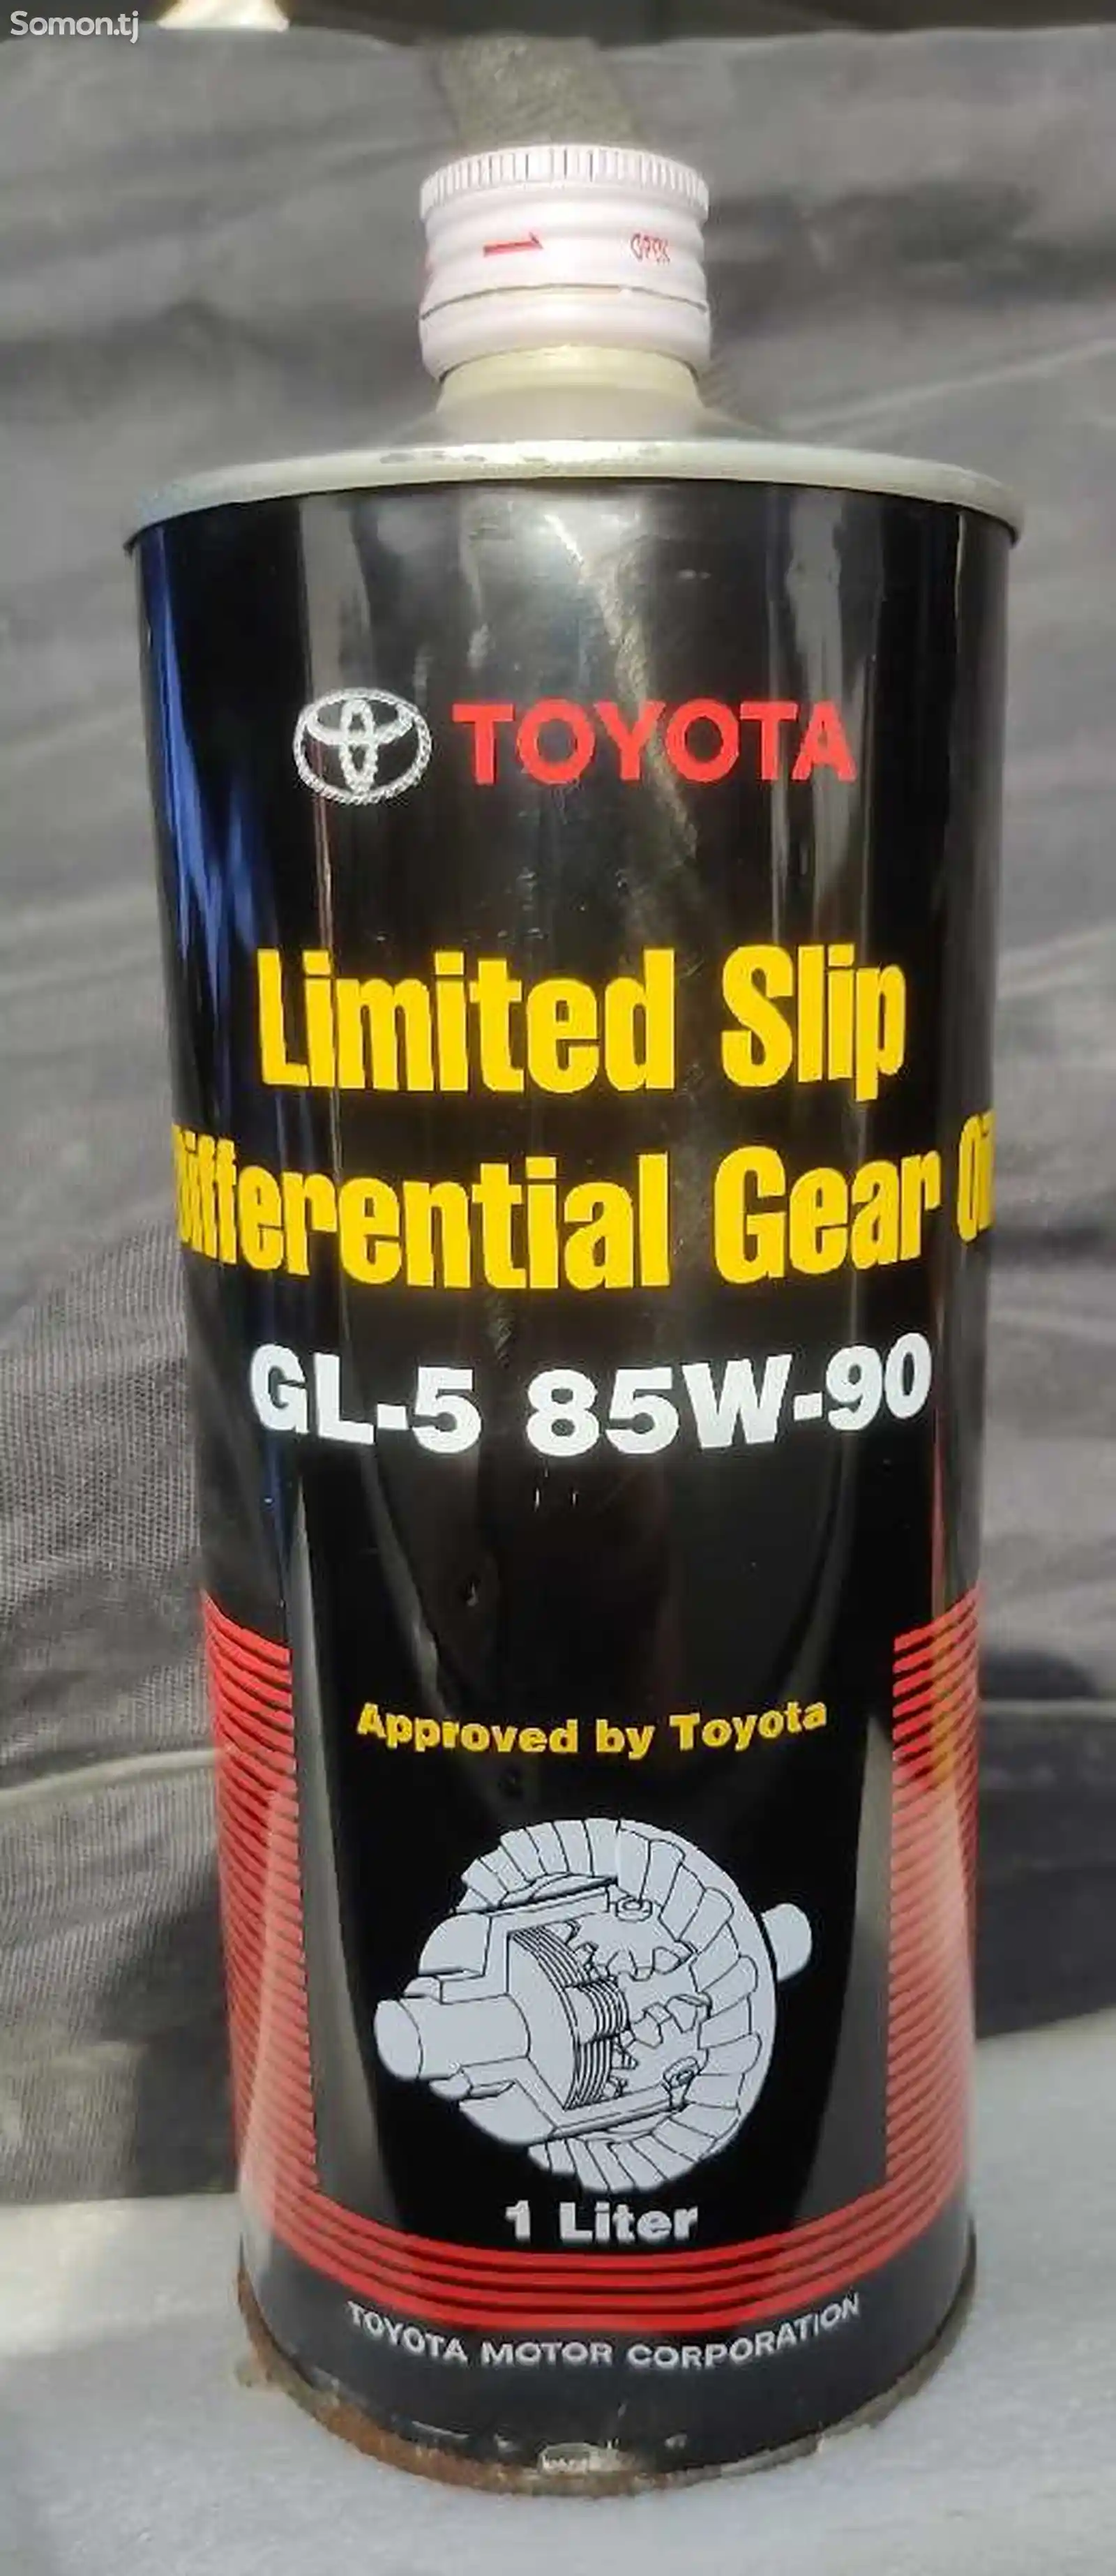 Масло редуктора Toyota Gl-5 85W-90-1